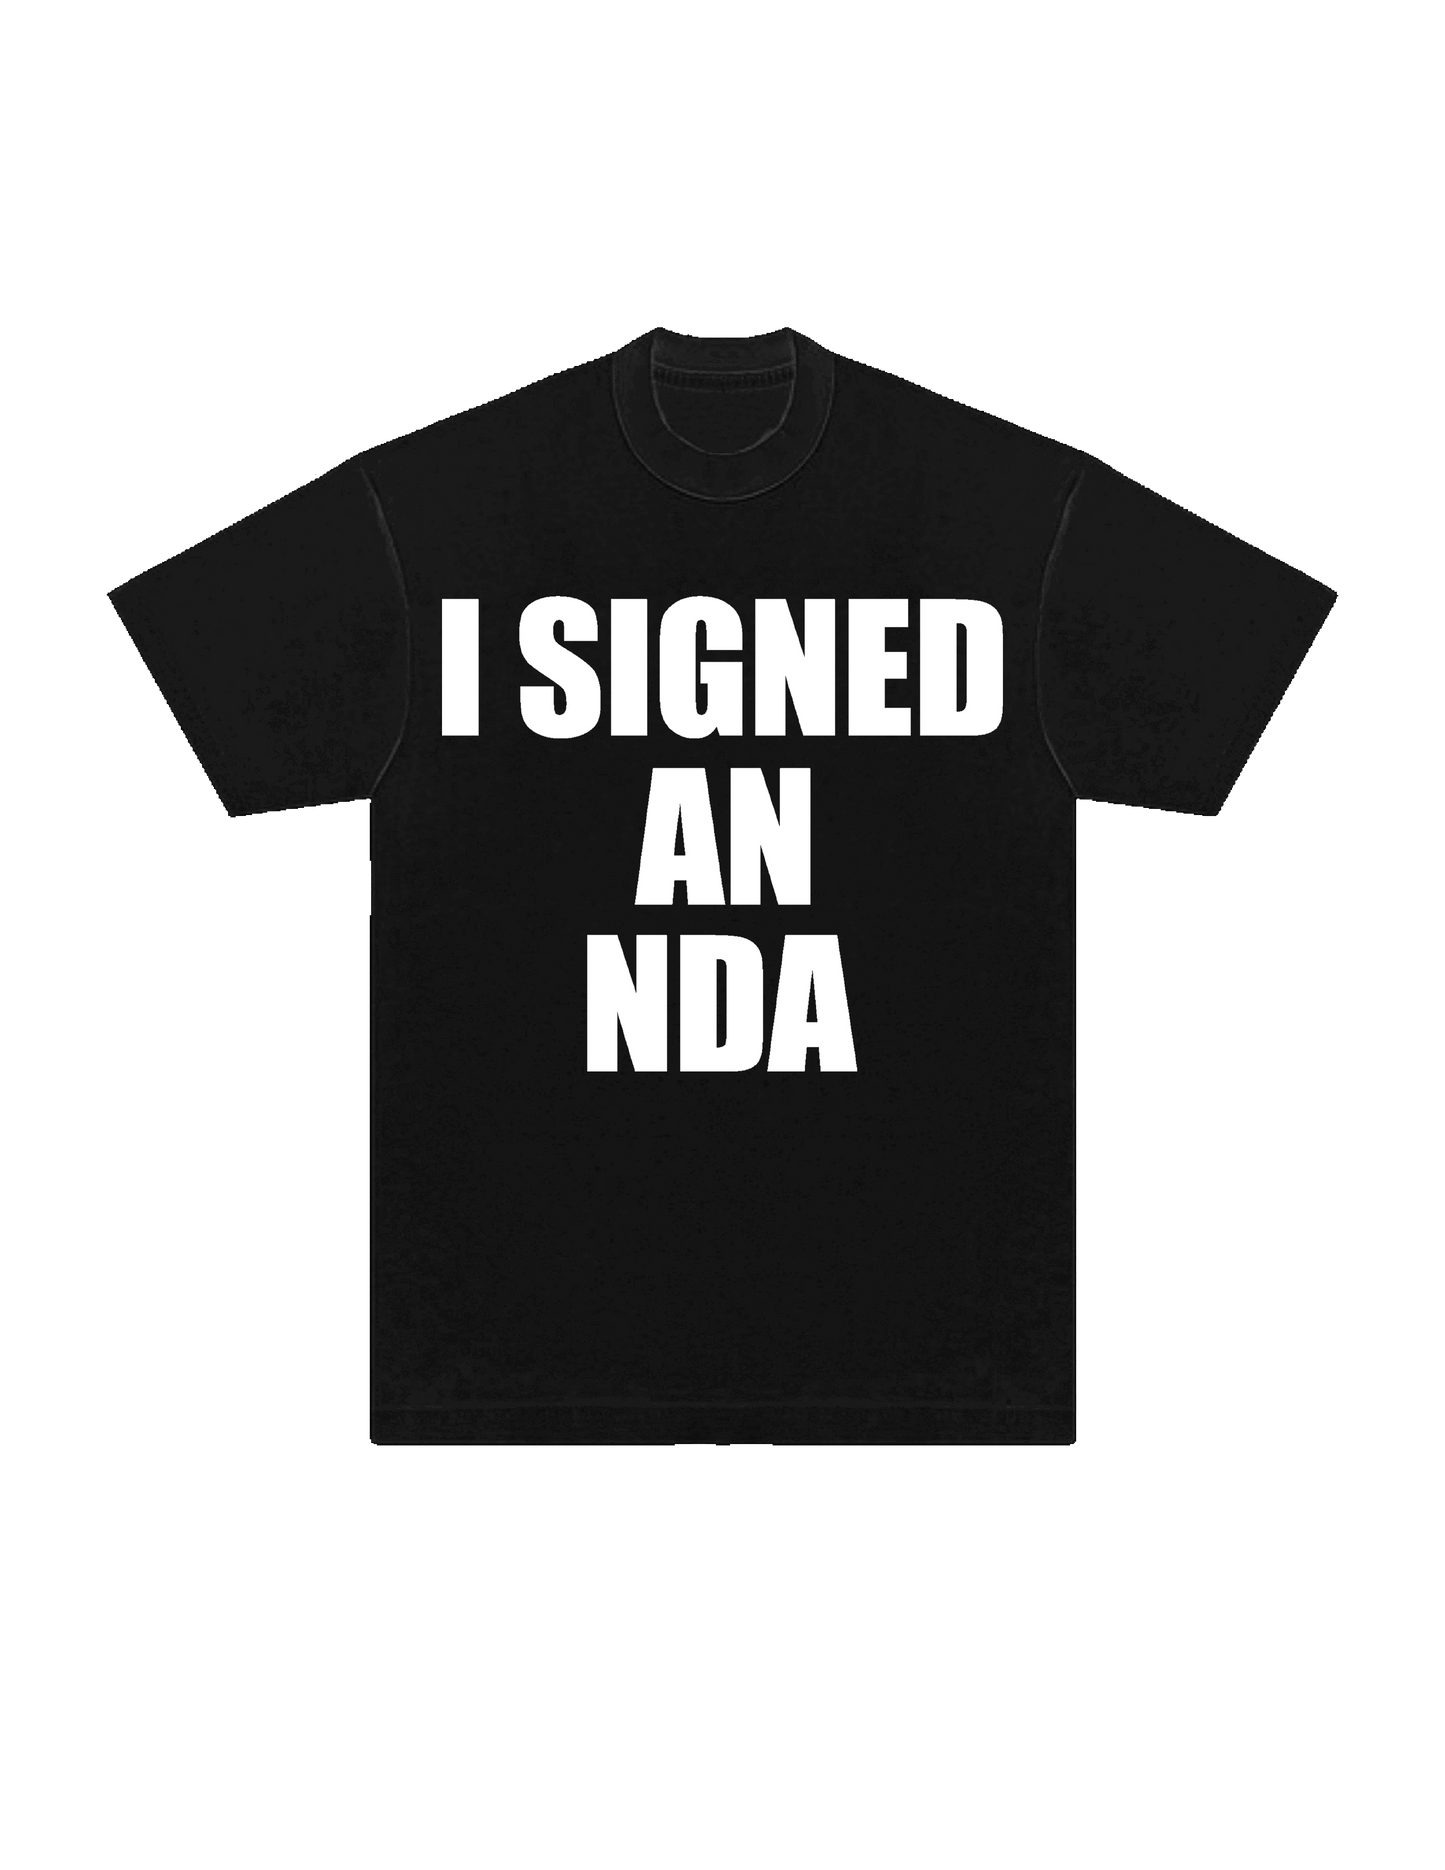 I Signed An NDA Tee